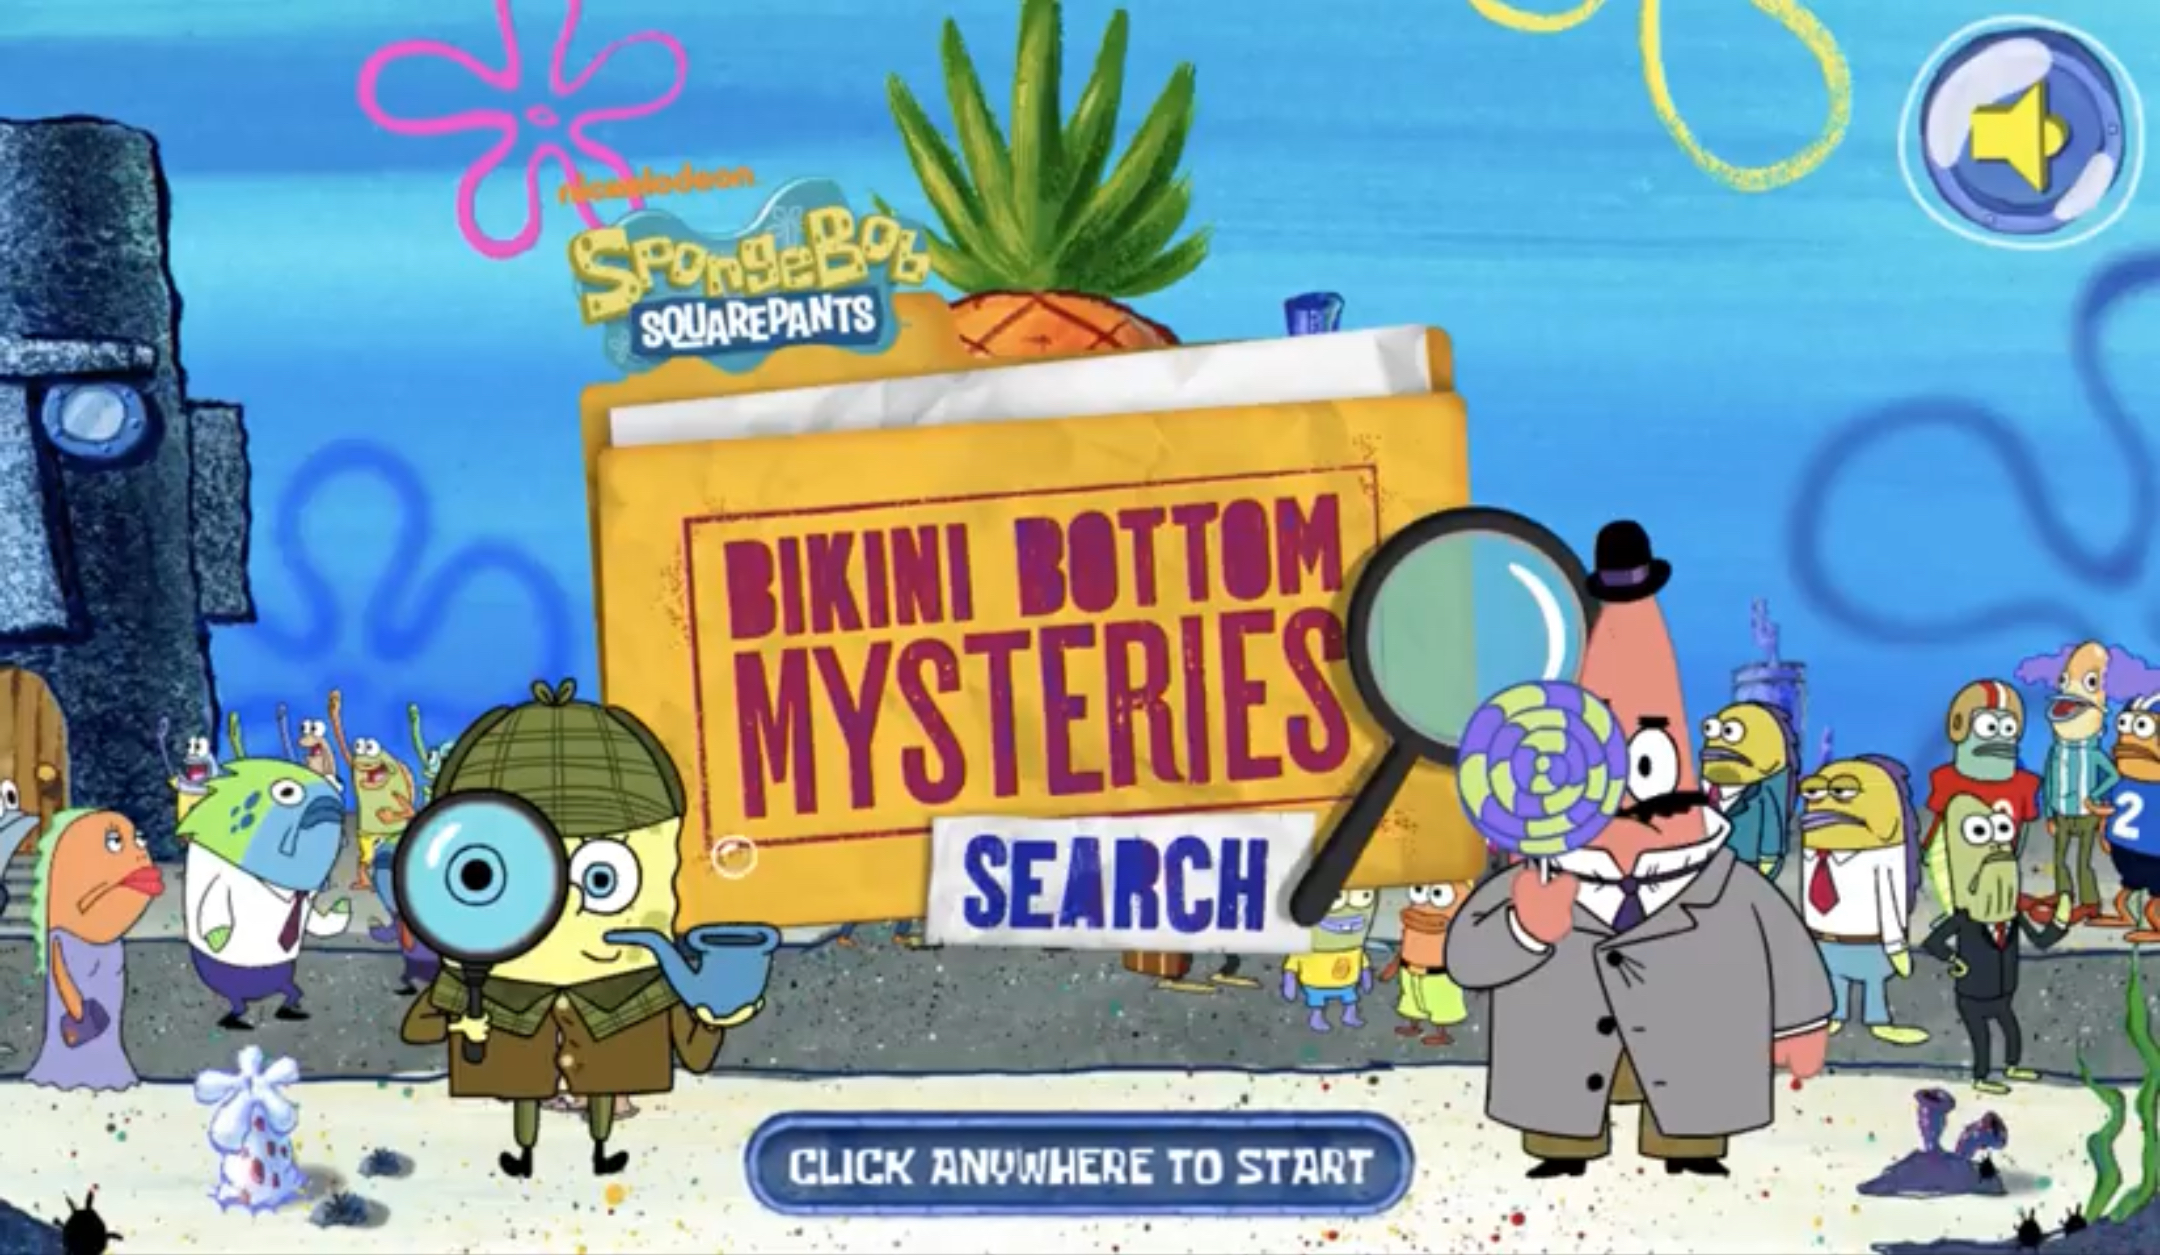 https://static.wikia.nocookie.net/spongebob/images/4/4c/Sb-mysteries-1024x576.jpg/revision/latest?cb=20210827005911